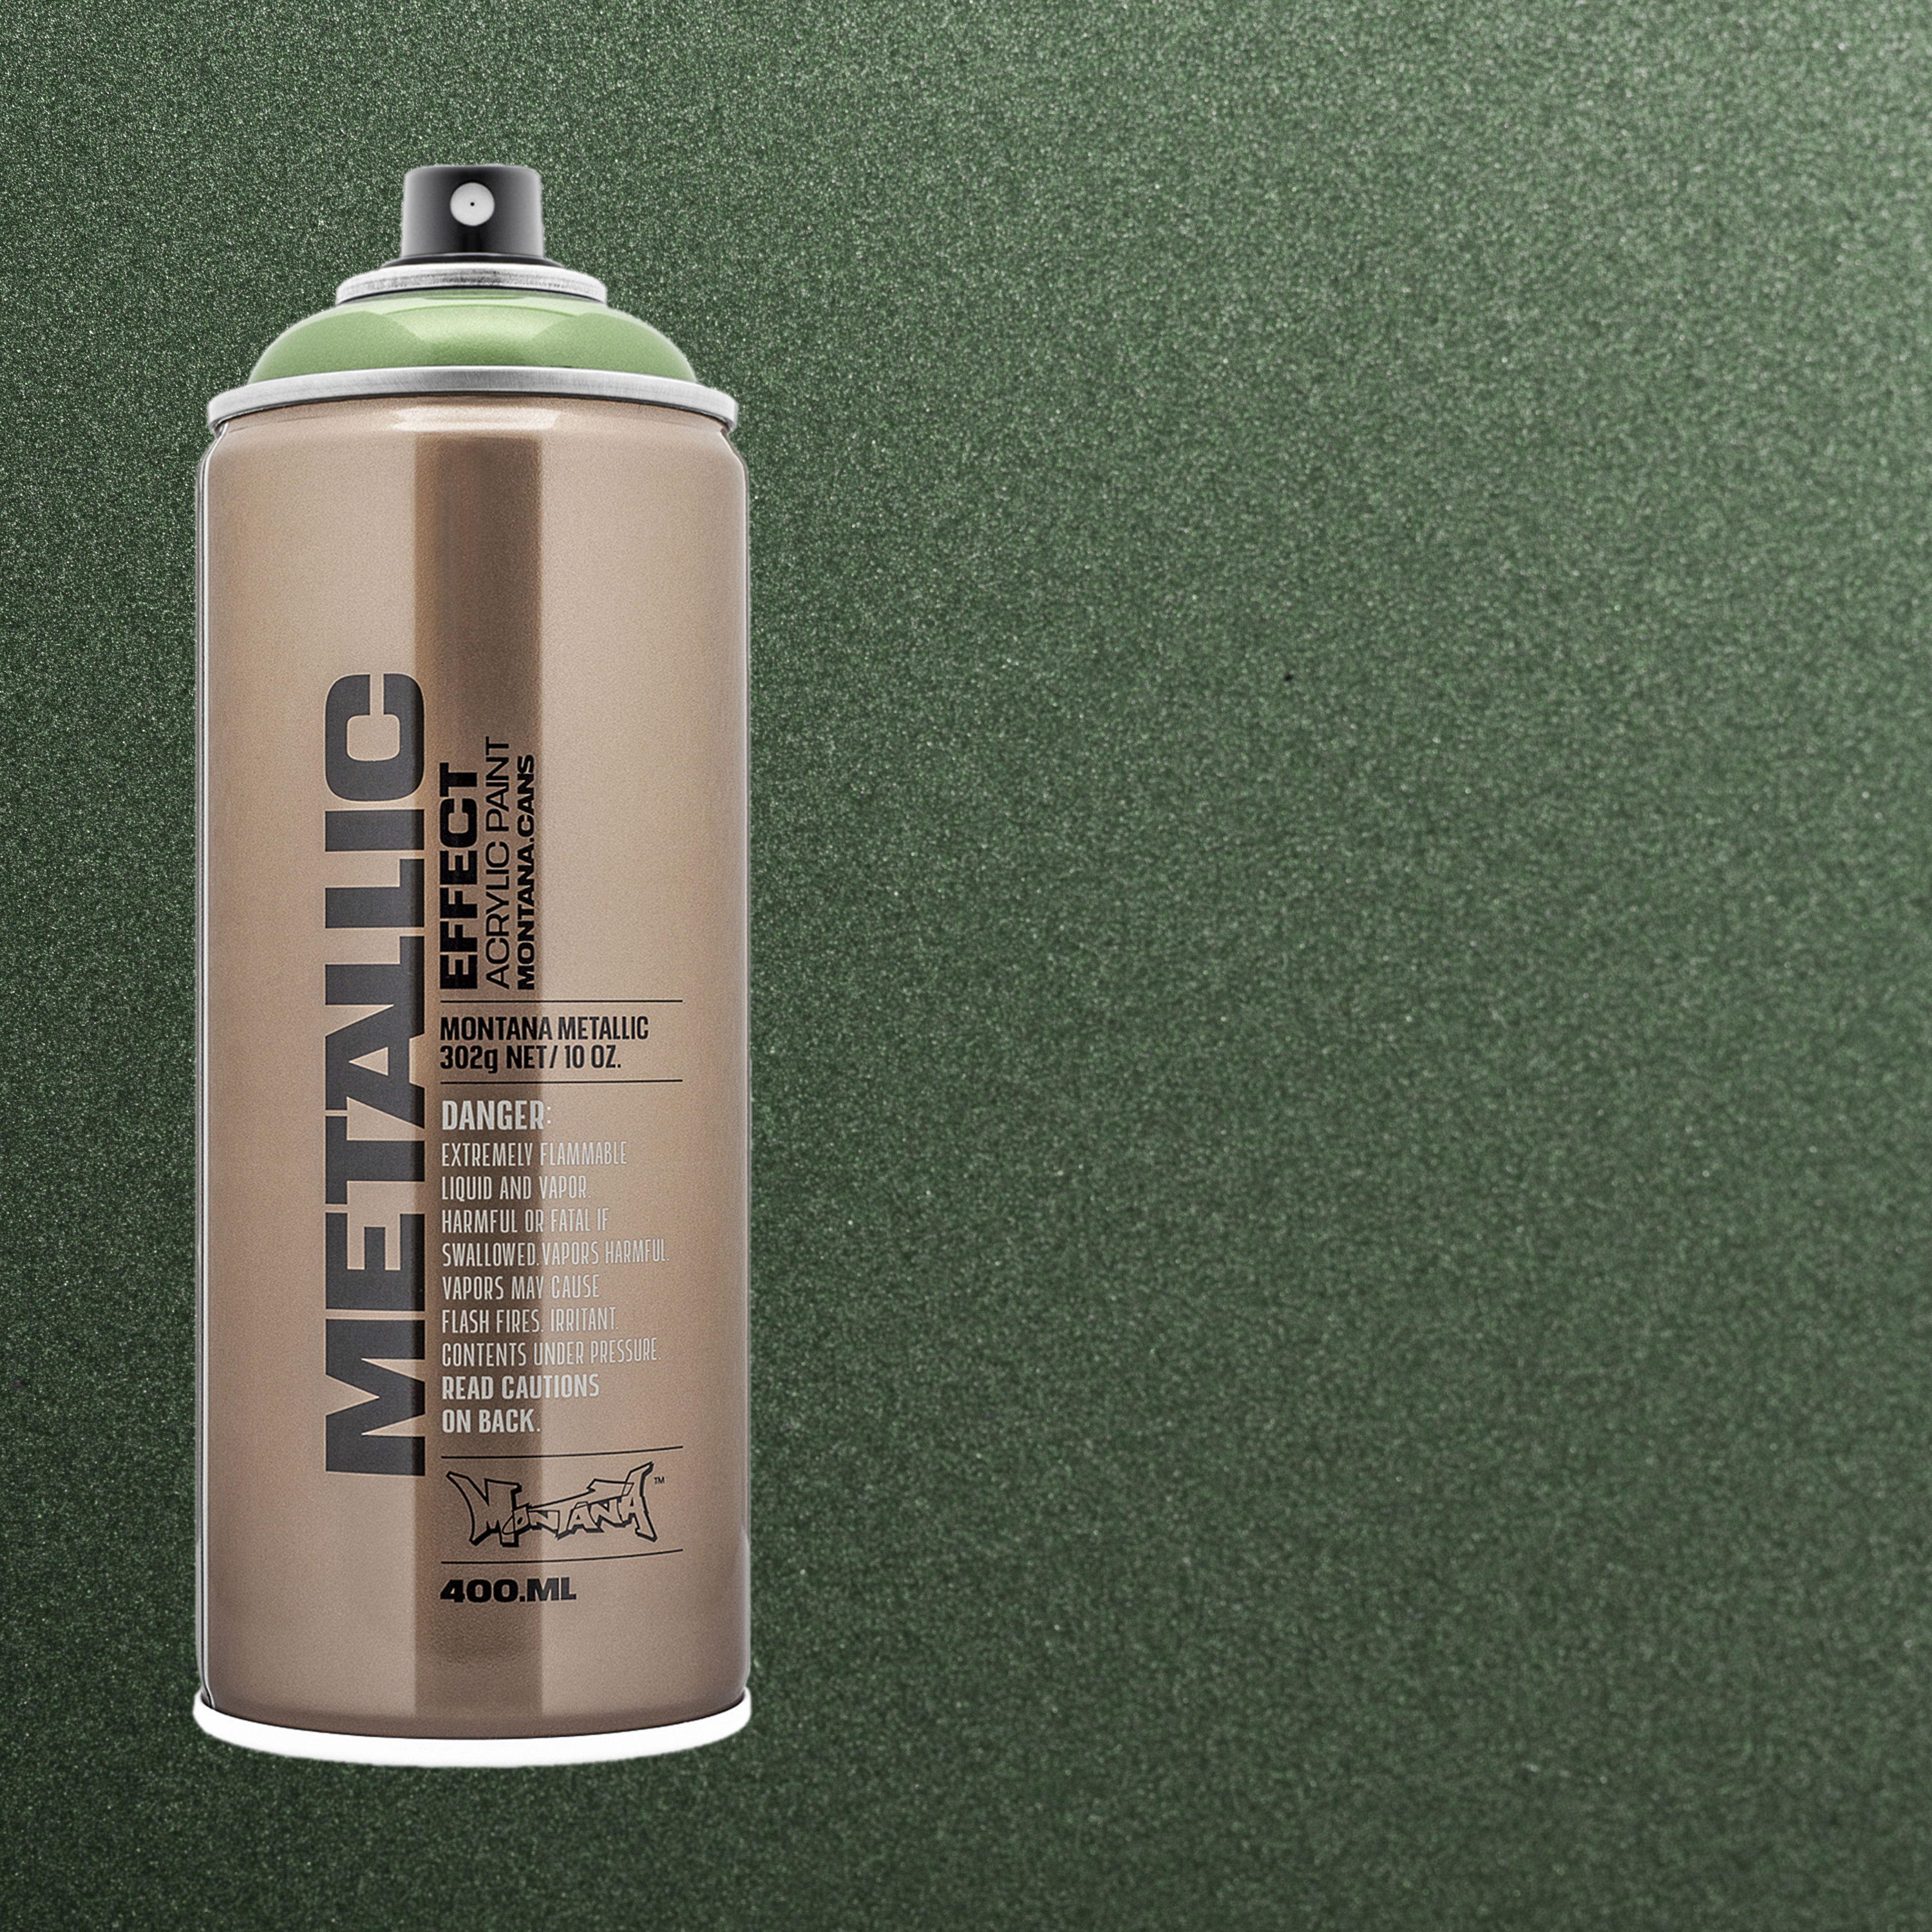 Montana Cans METALLIC EFFECT Semi-gloss Avocado Green Metallic Spray Paint  (NET WT. 10.65-oz) in the Spray Paint department at